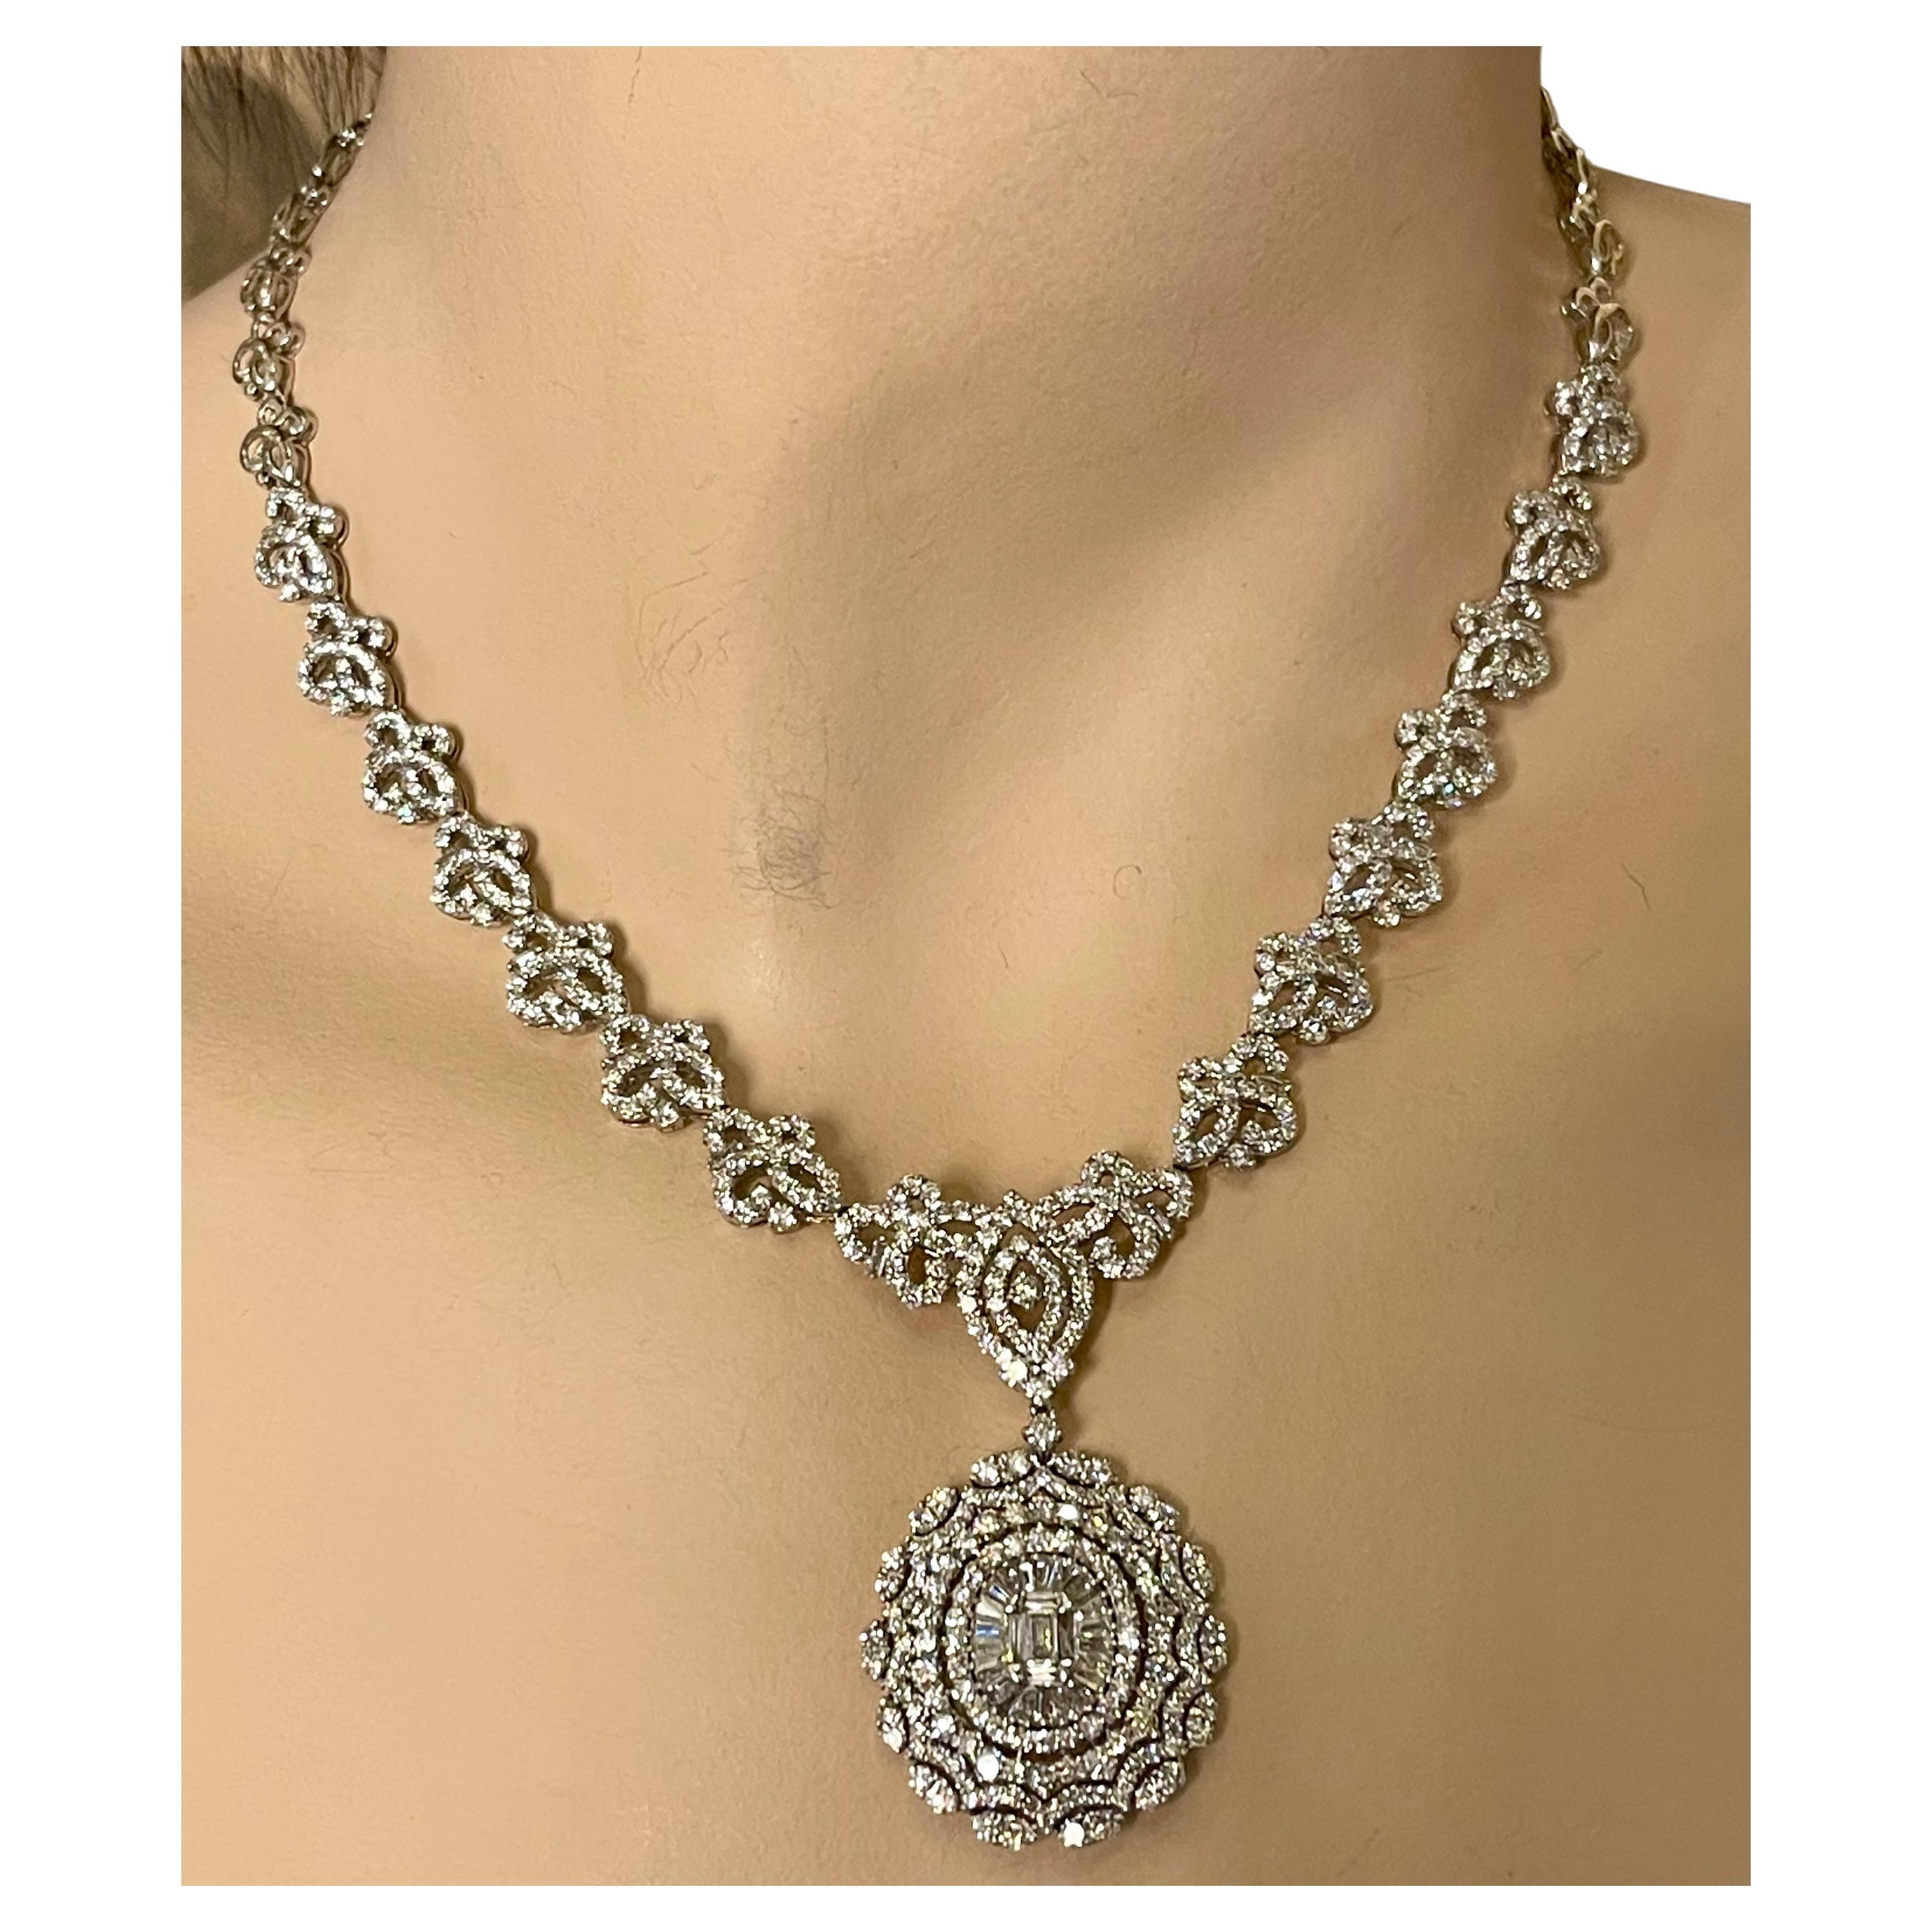 Magnificent 18.70 Carat Fancy Diamond Medallion Necklace in 18 Karat White Gold